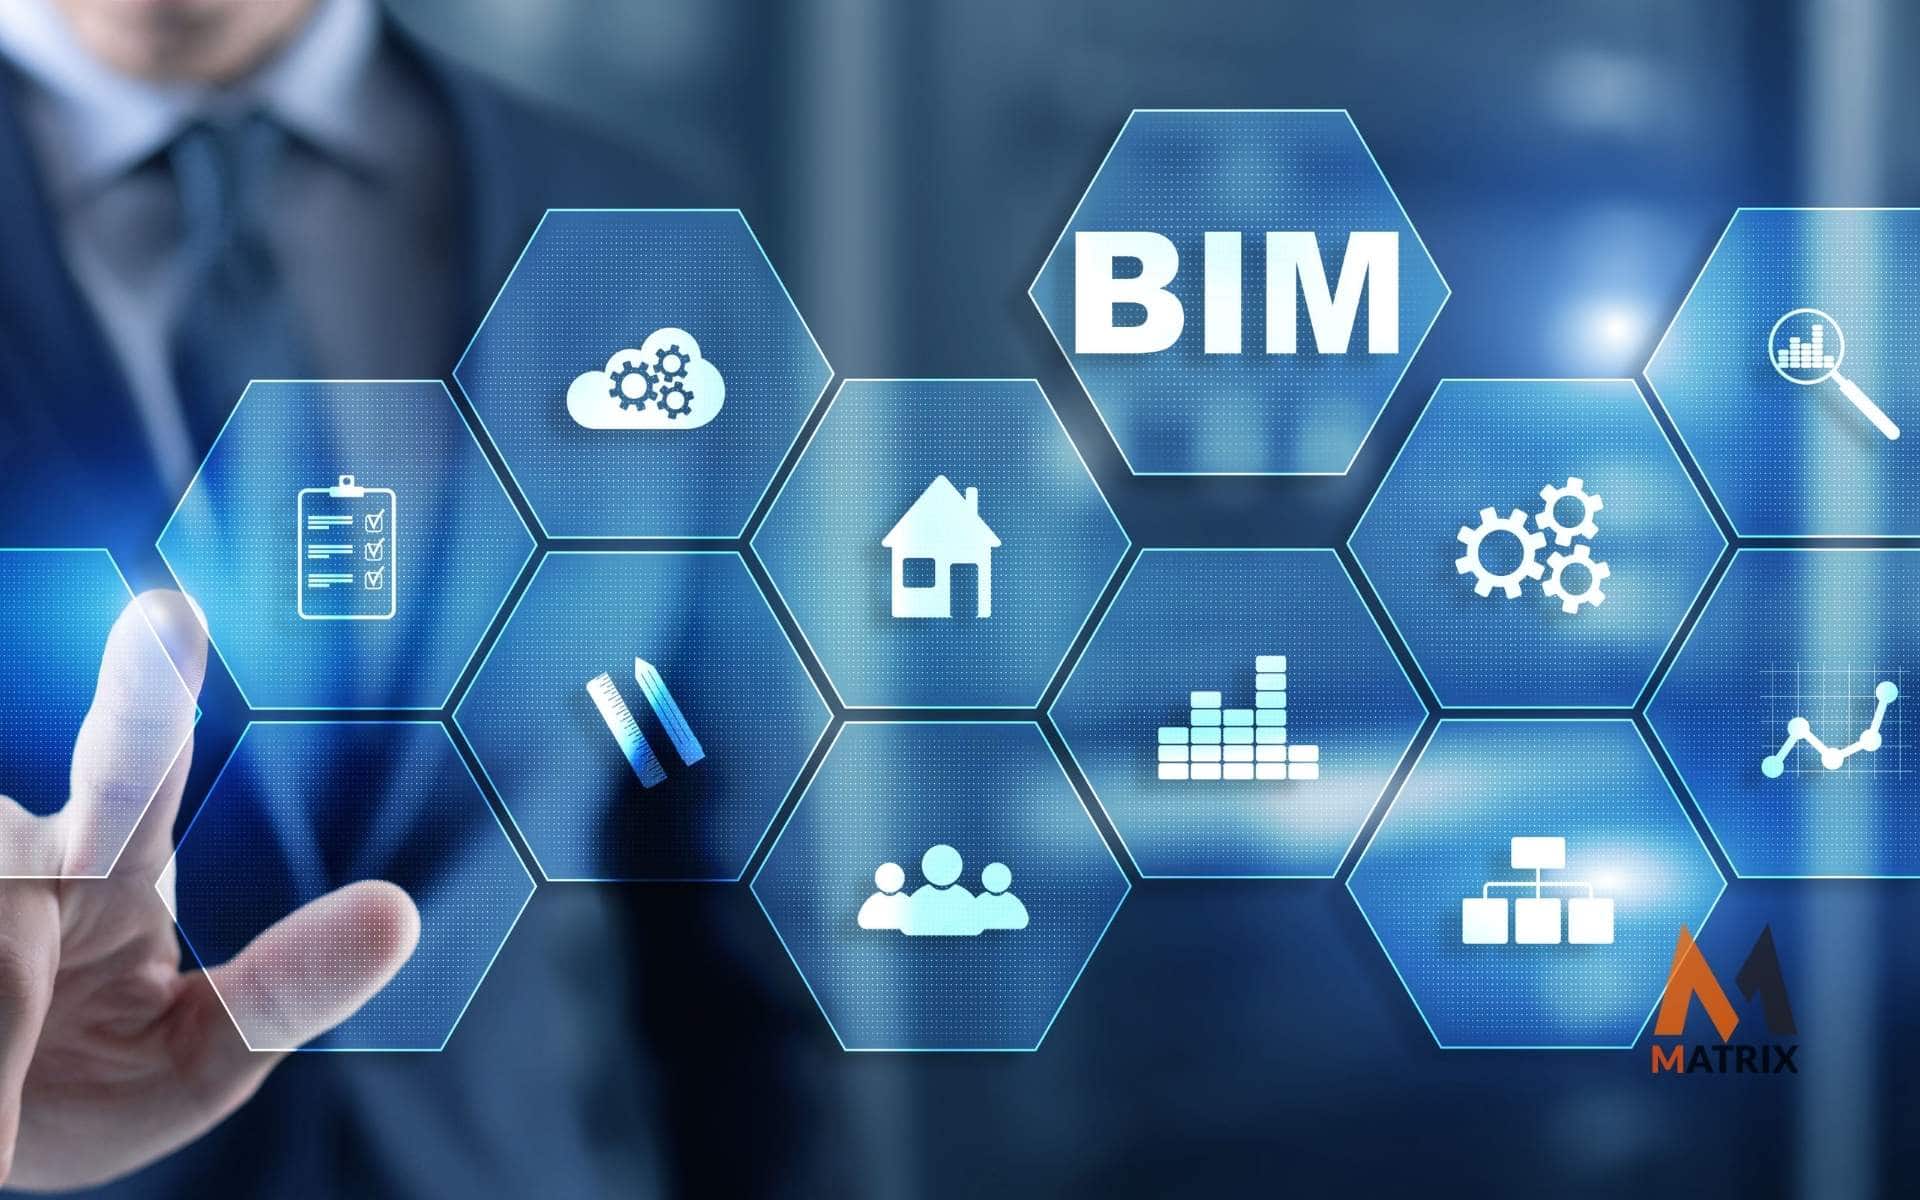 What is Information Architecture bim